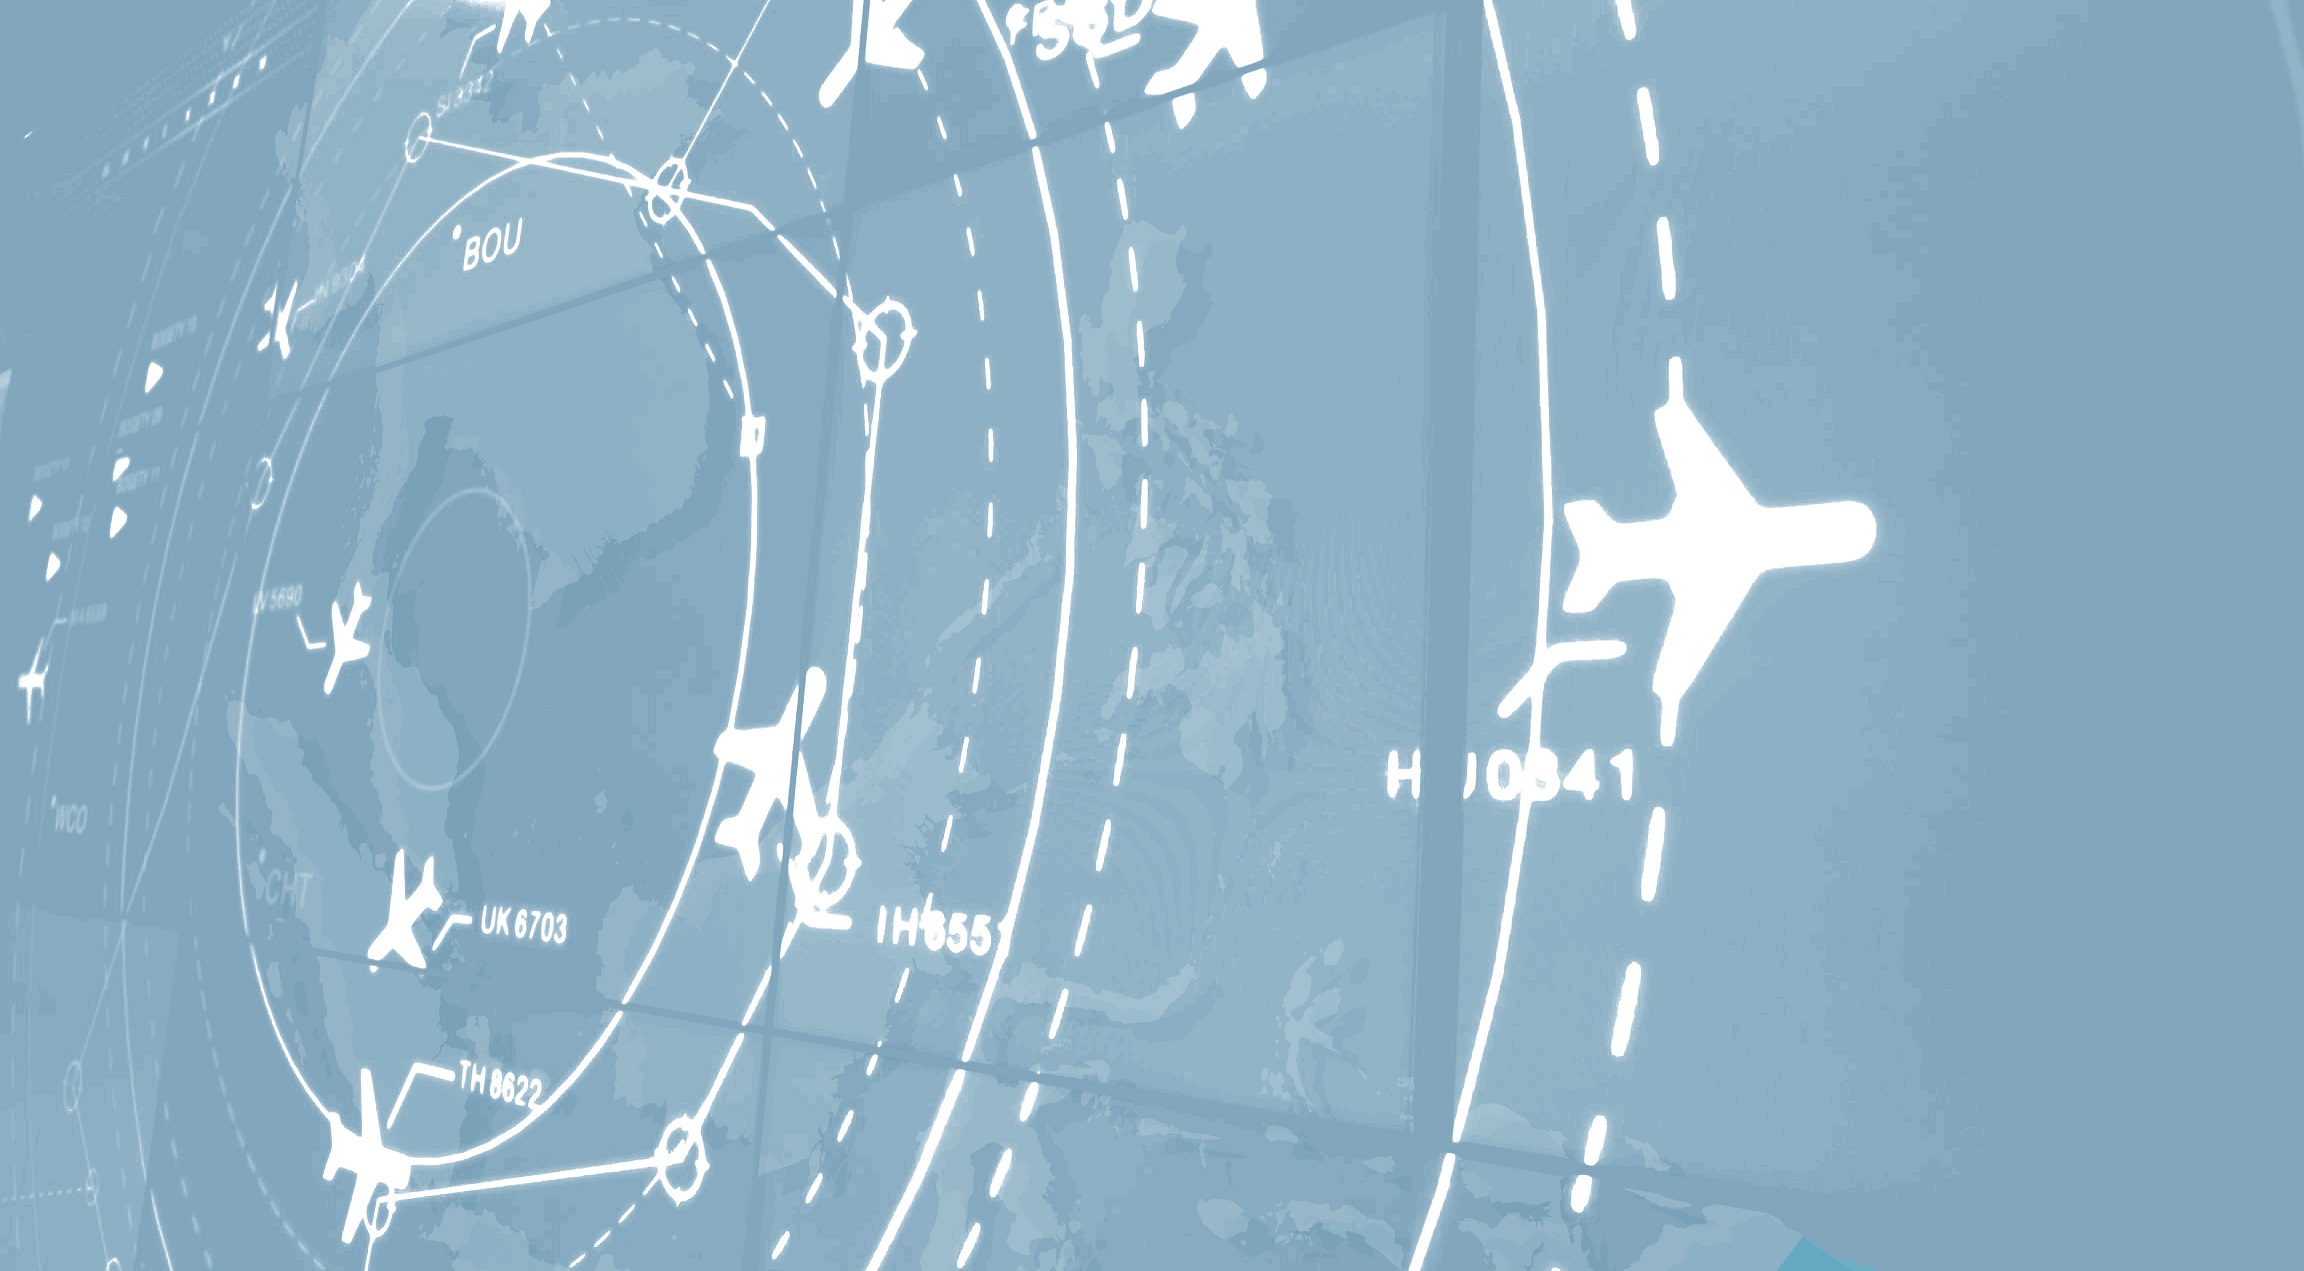 Abstract Artwork approximating a flight radar display